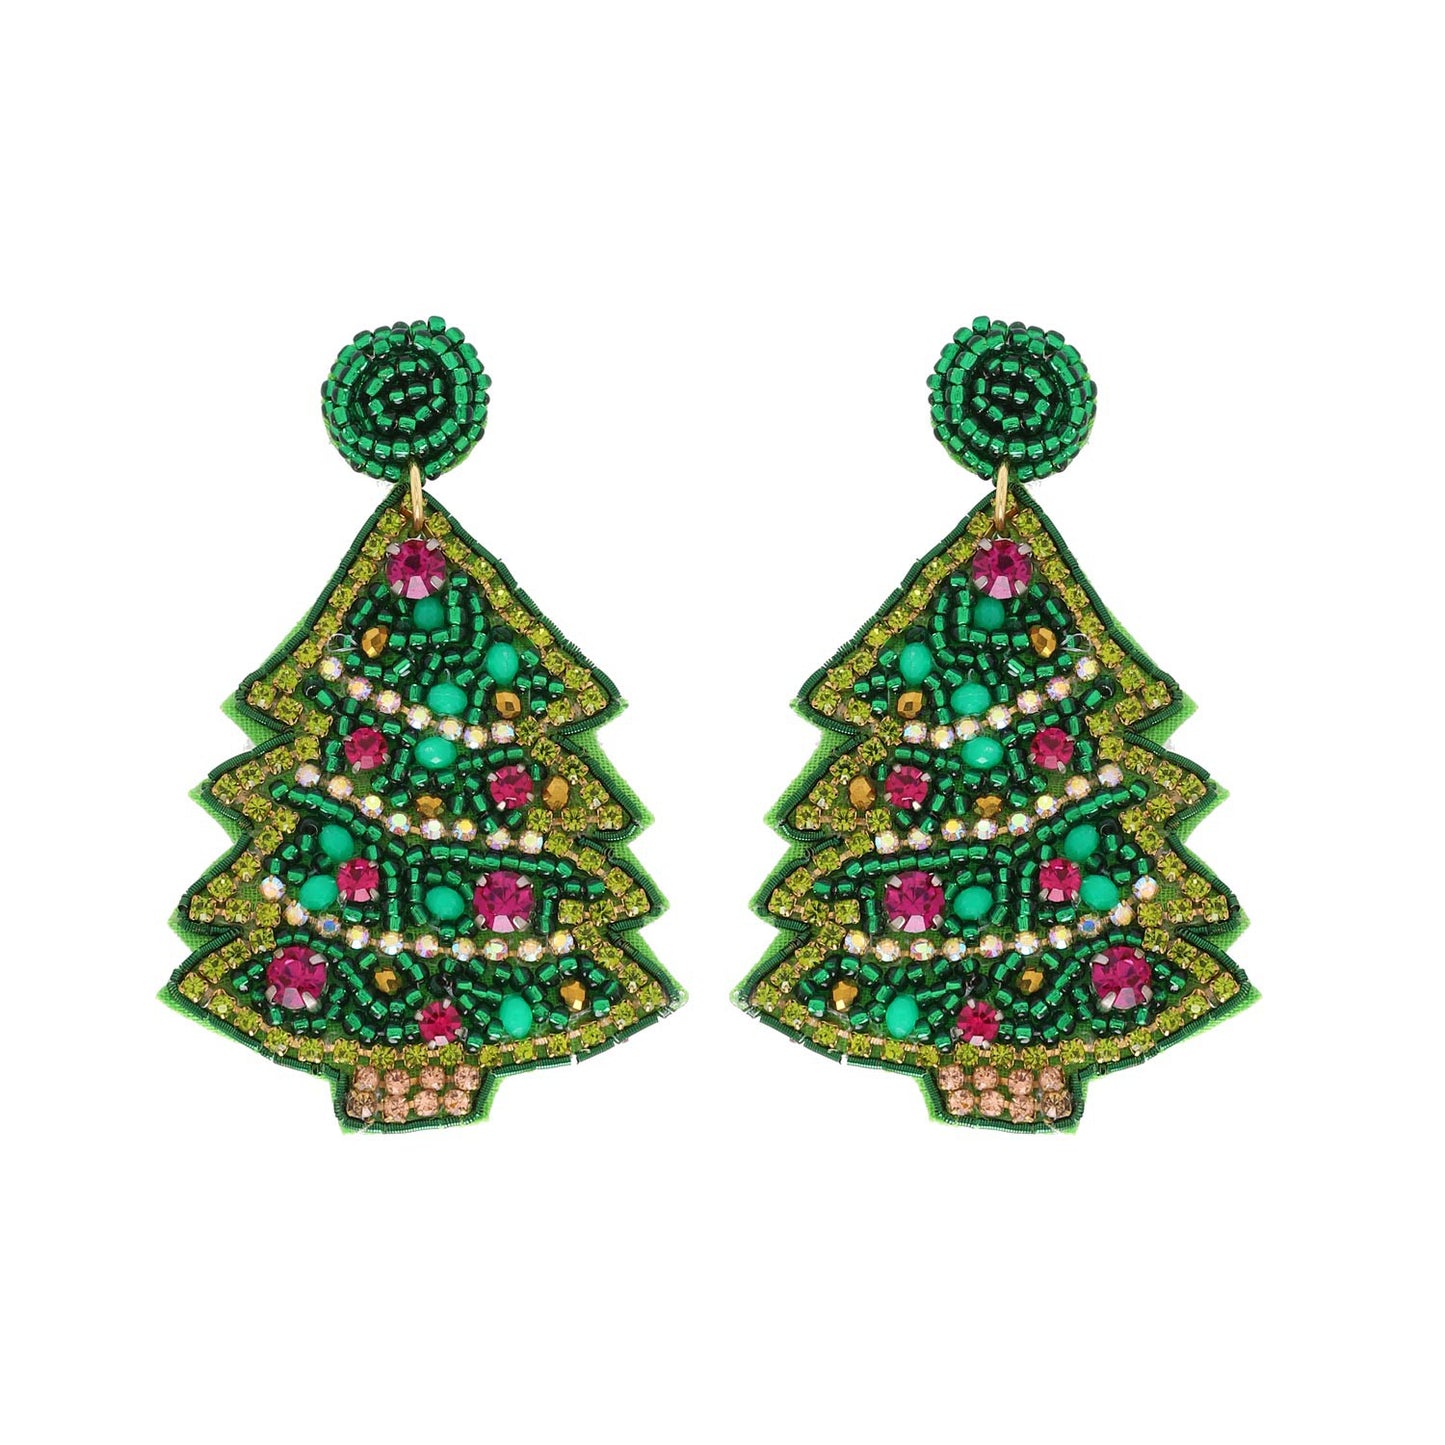 Jeweled Tree Earrings